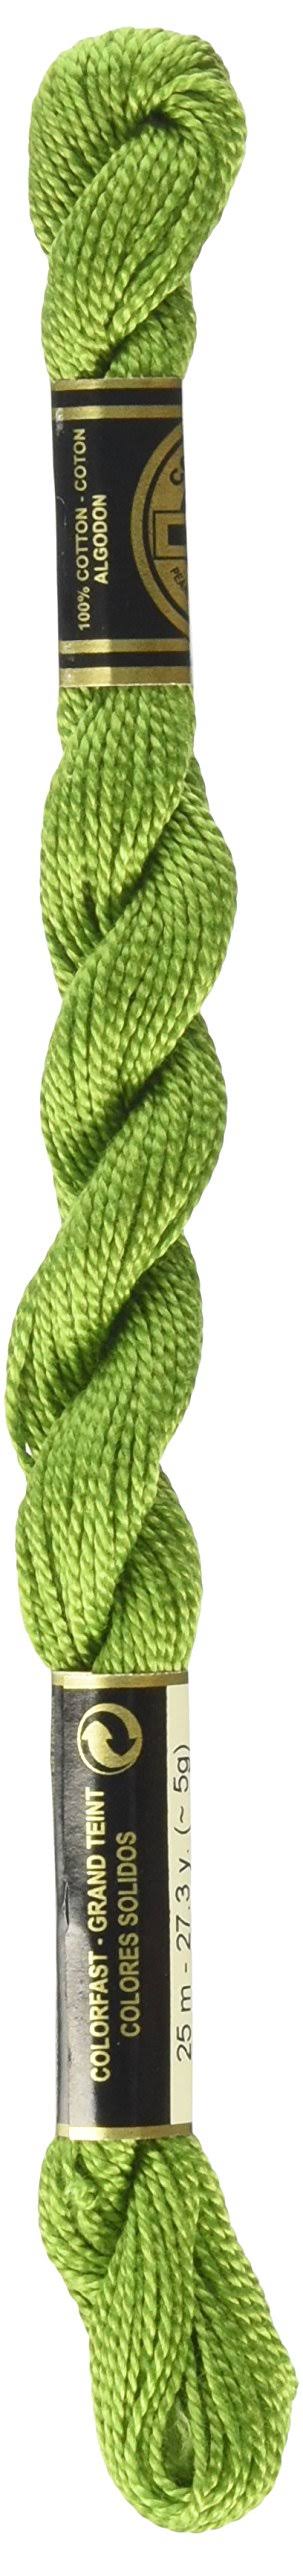 DMC Pearl Cotton Skeins Size 5 - 27.3 Yards-Light Avocado Green